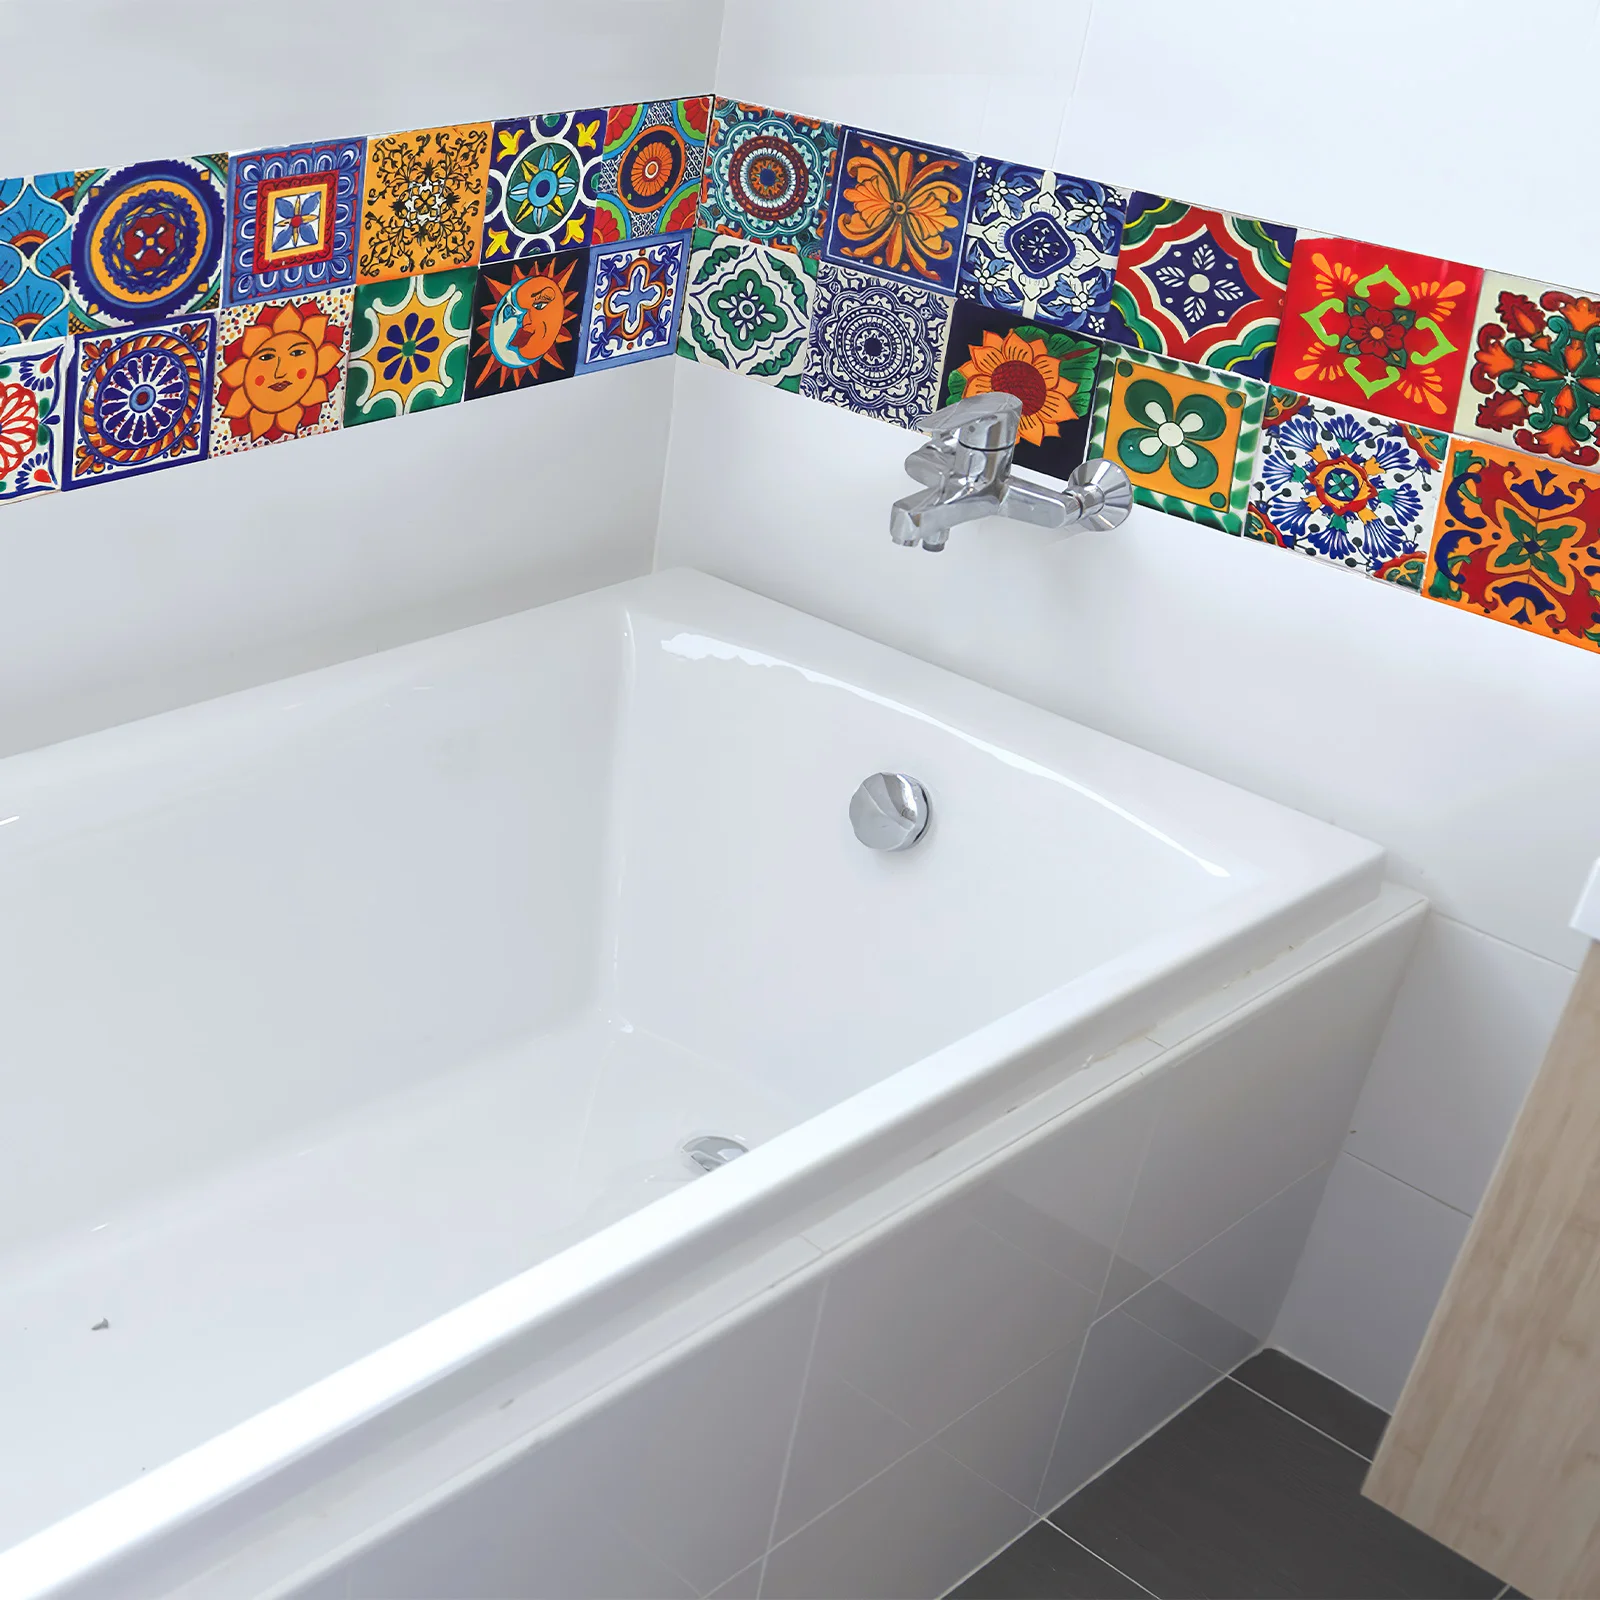 

24 Sheets Vintage Tile Stickers Peel and Wall for Kitchen Tiles Backsplash Decor Trim Decorate Bathroom